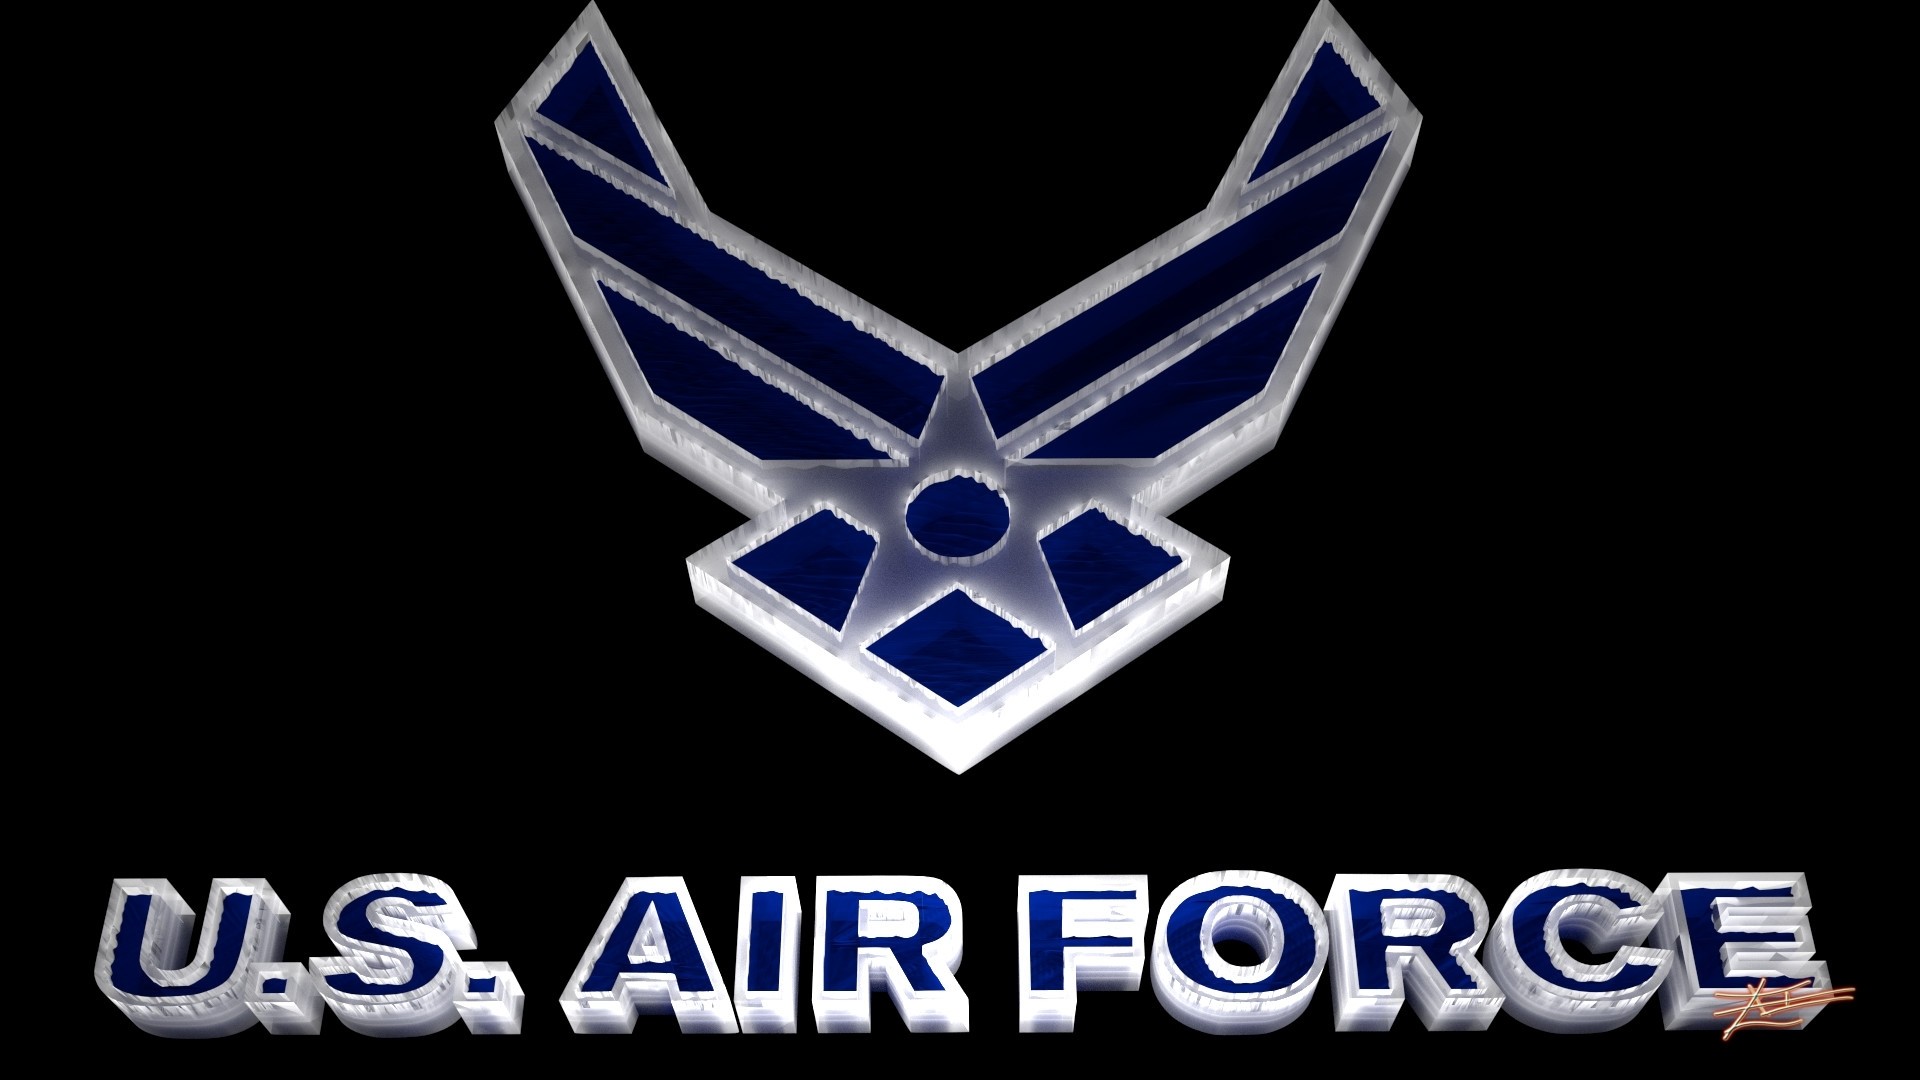 1920x1080 Title : air force logo wallpaper Â·â . Dimension : 1920 x 1080. File Type :  JPG/JPEG